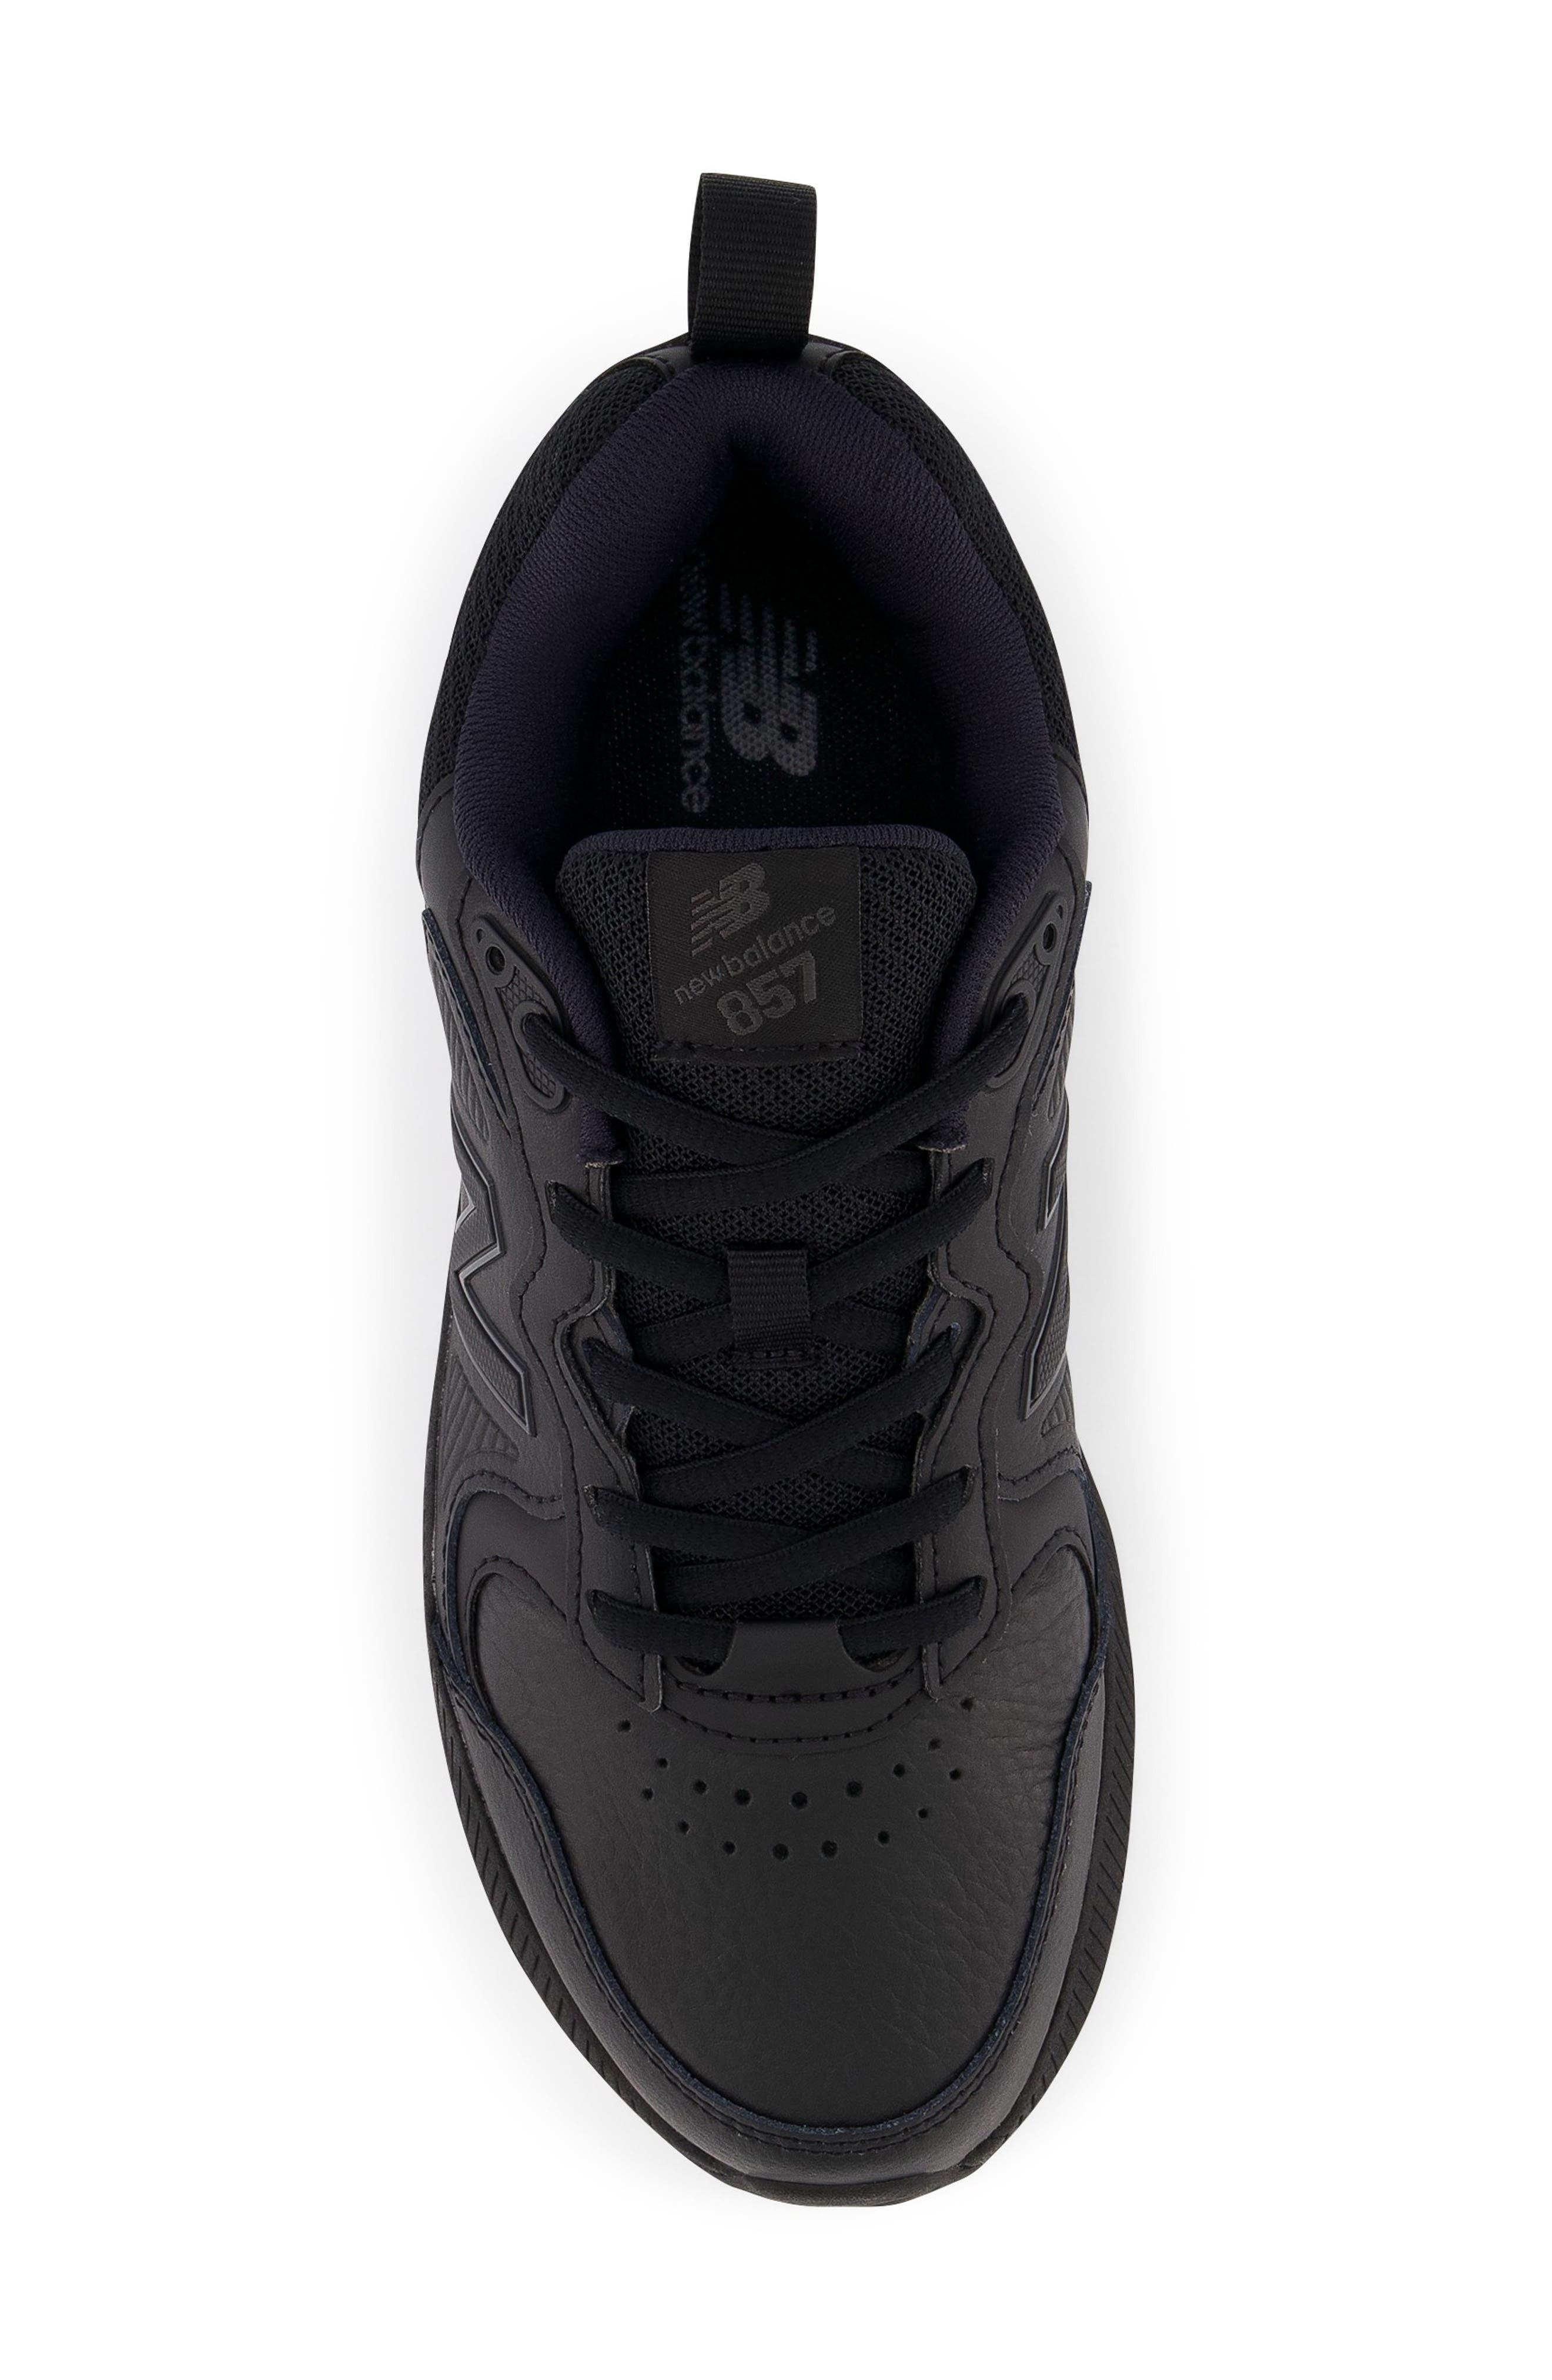 New Balance Mx 857 V3 Training Shoe in Black | Lyst